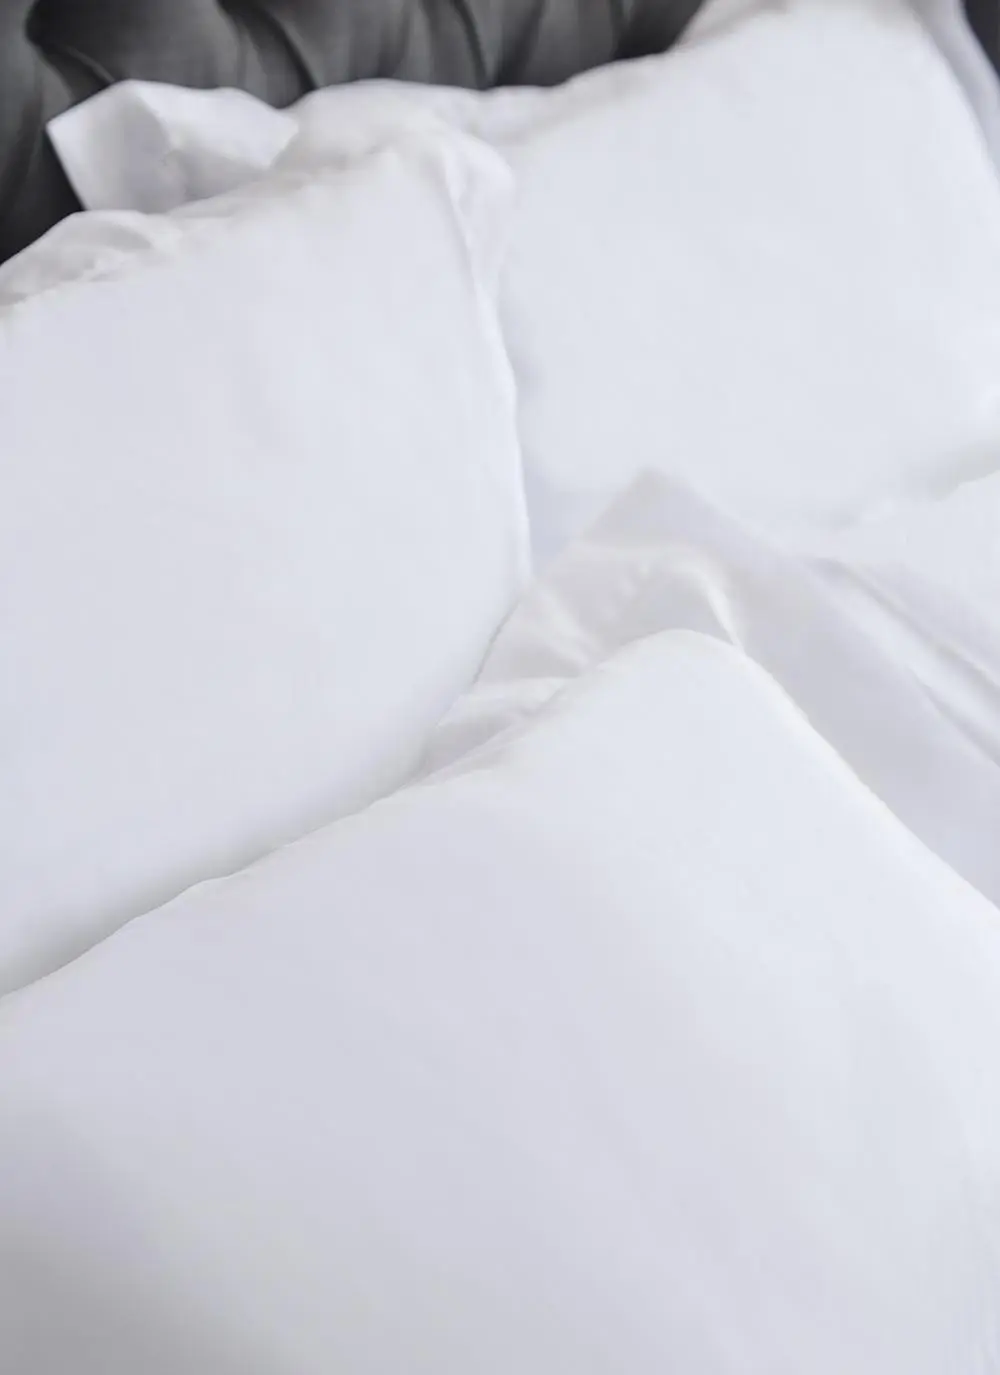 Blarney Irish Linen Pillowcases Set of 2